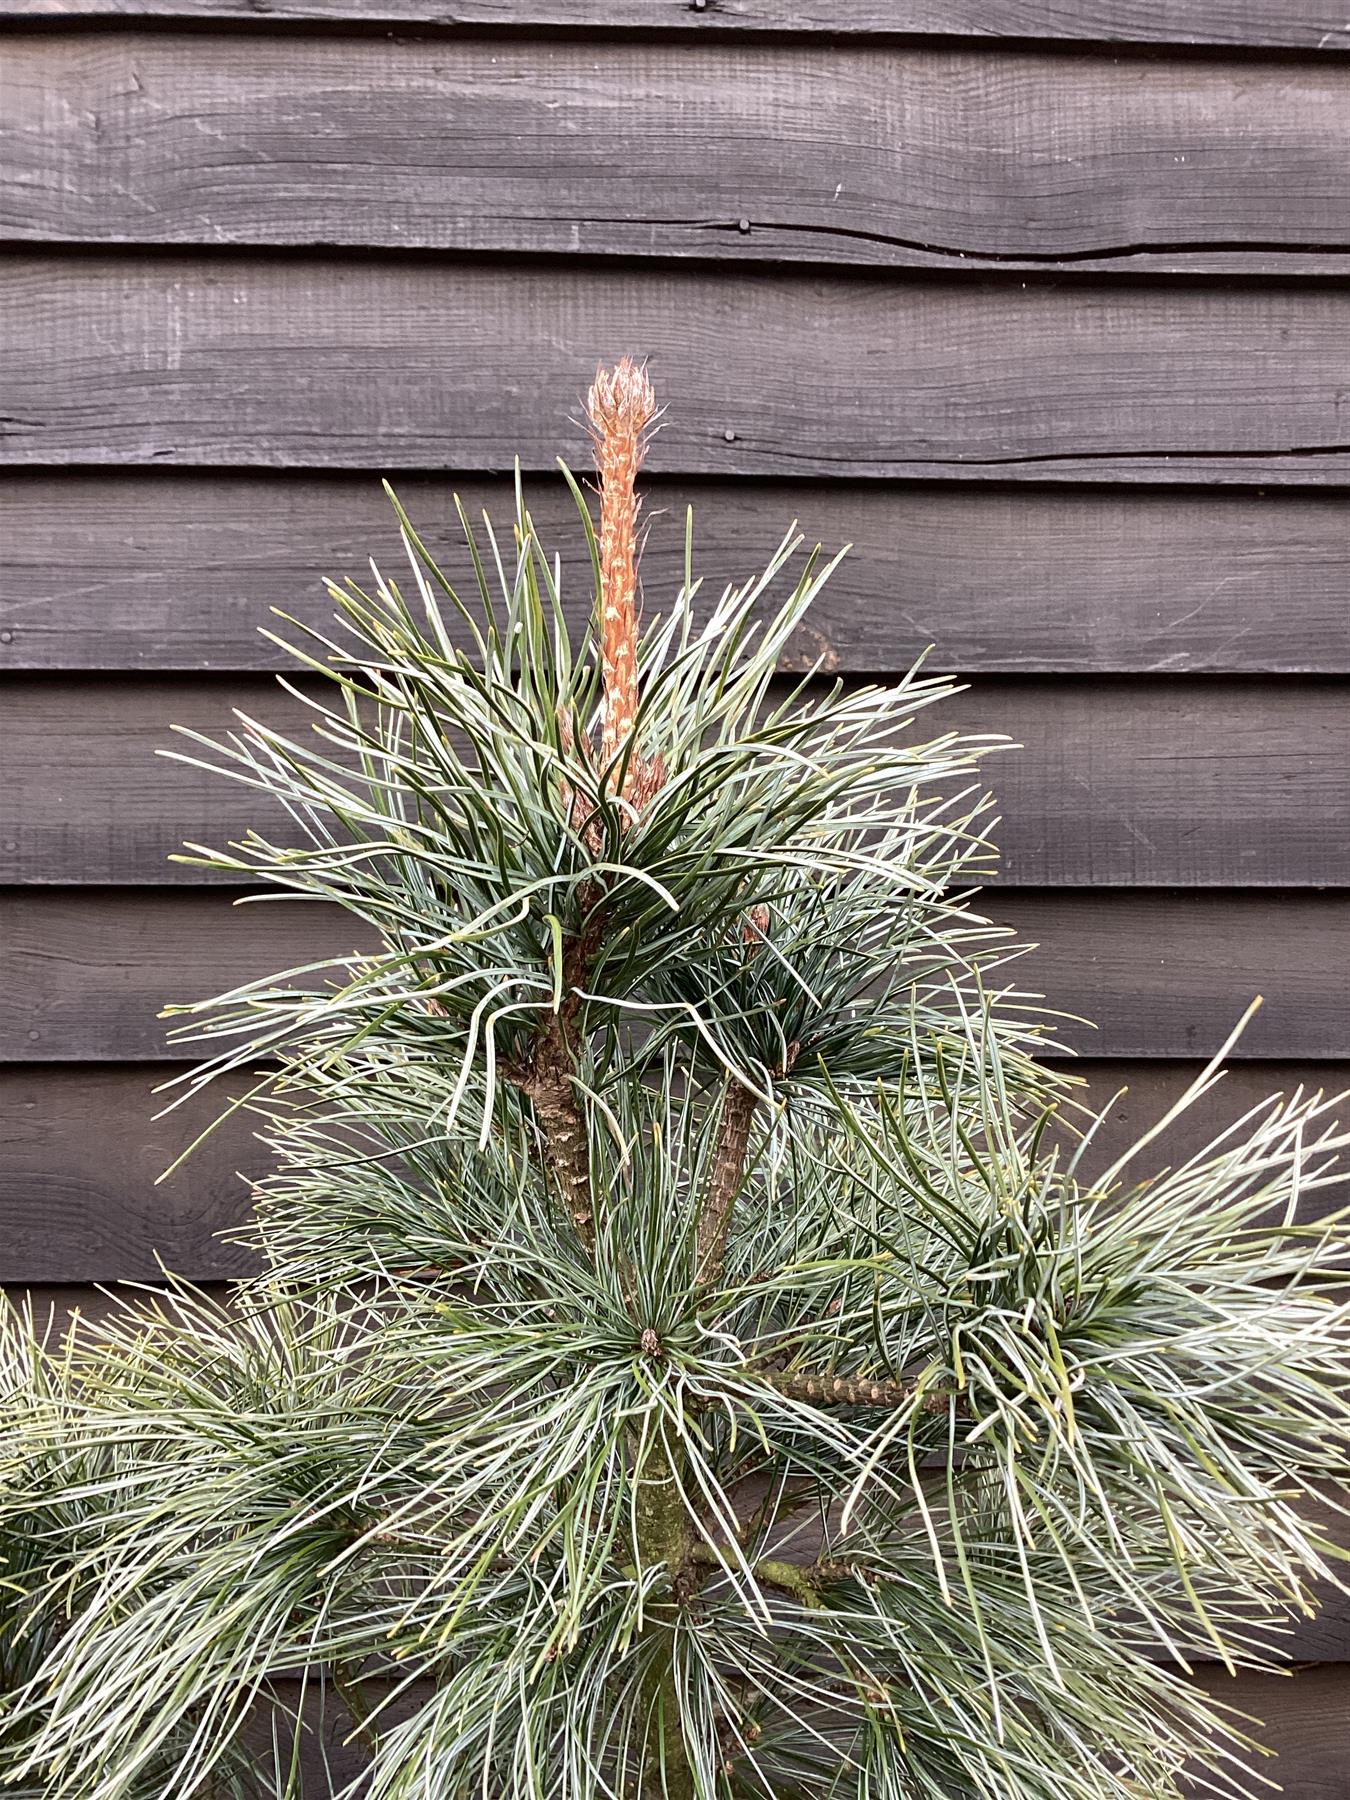 Pinus koraiensis 'Silveray' | Silveray Korean Pine - Height 130cm - Width 100-120cm - 65lt